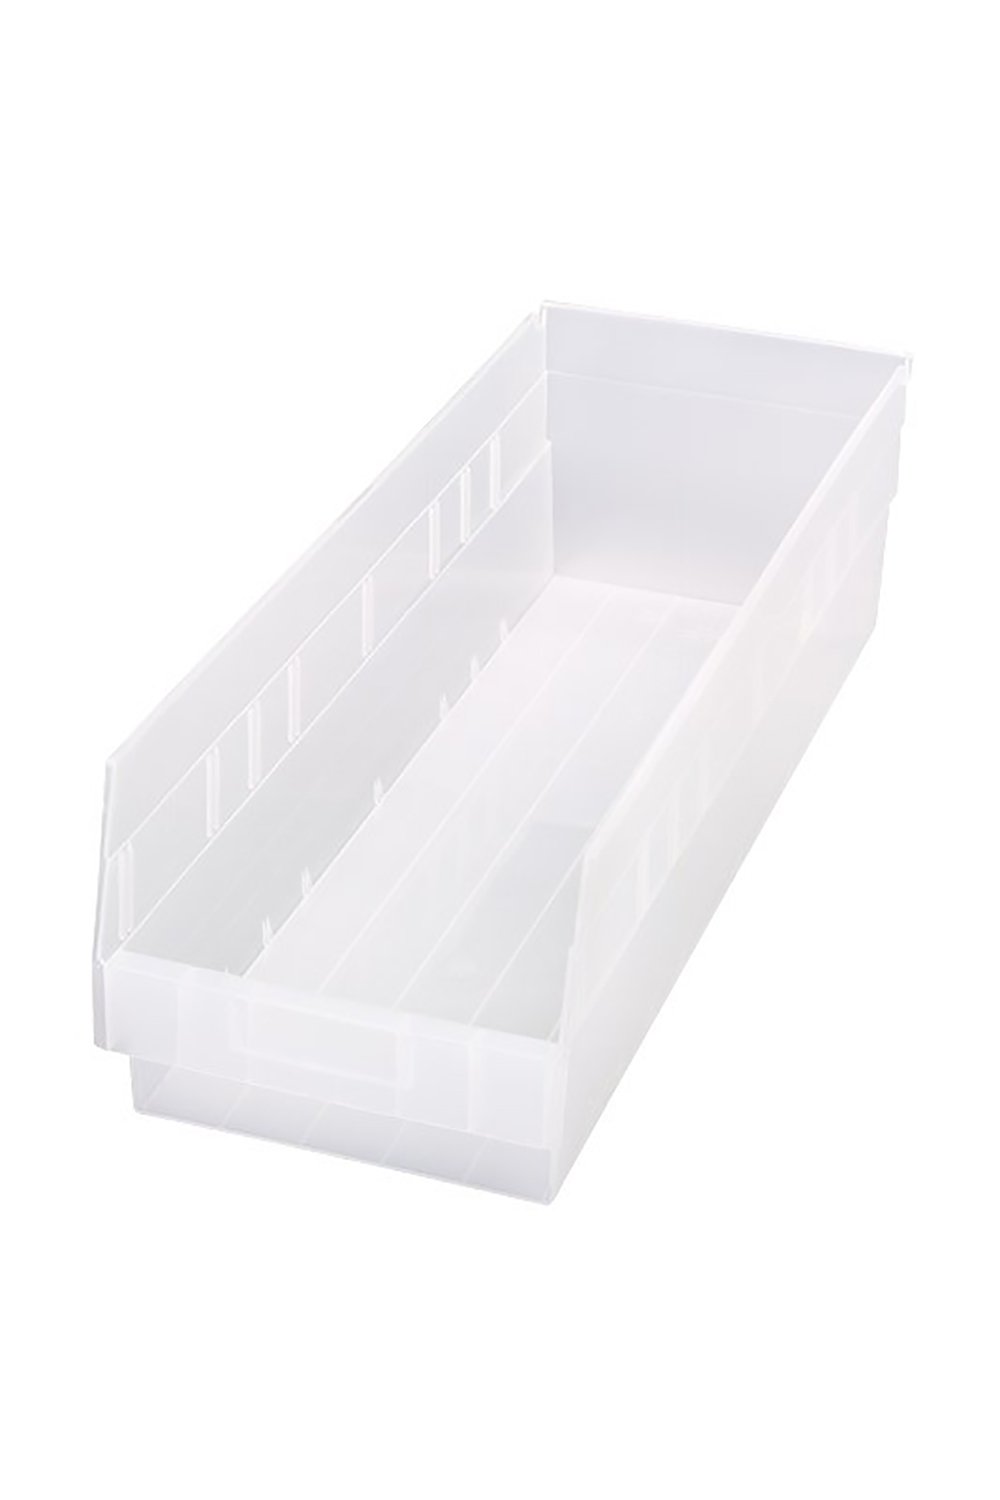 Shelf Bin for 24"D Shelves Bins & Containers Acart 23-5/8" x 8-3/8" x 6" Clear 